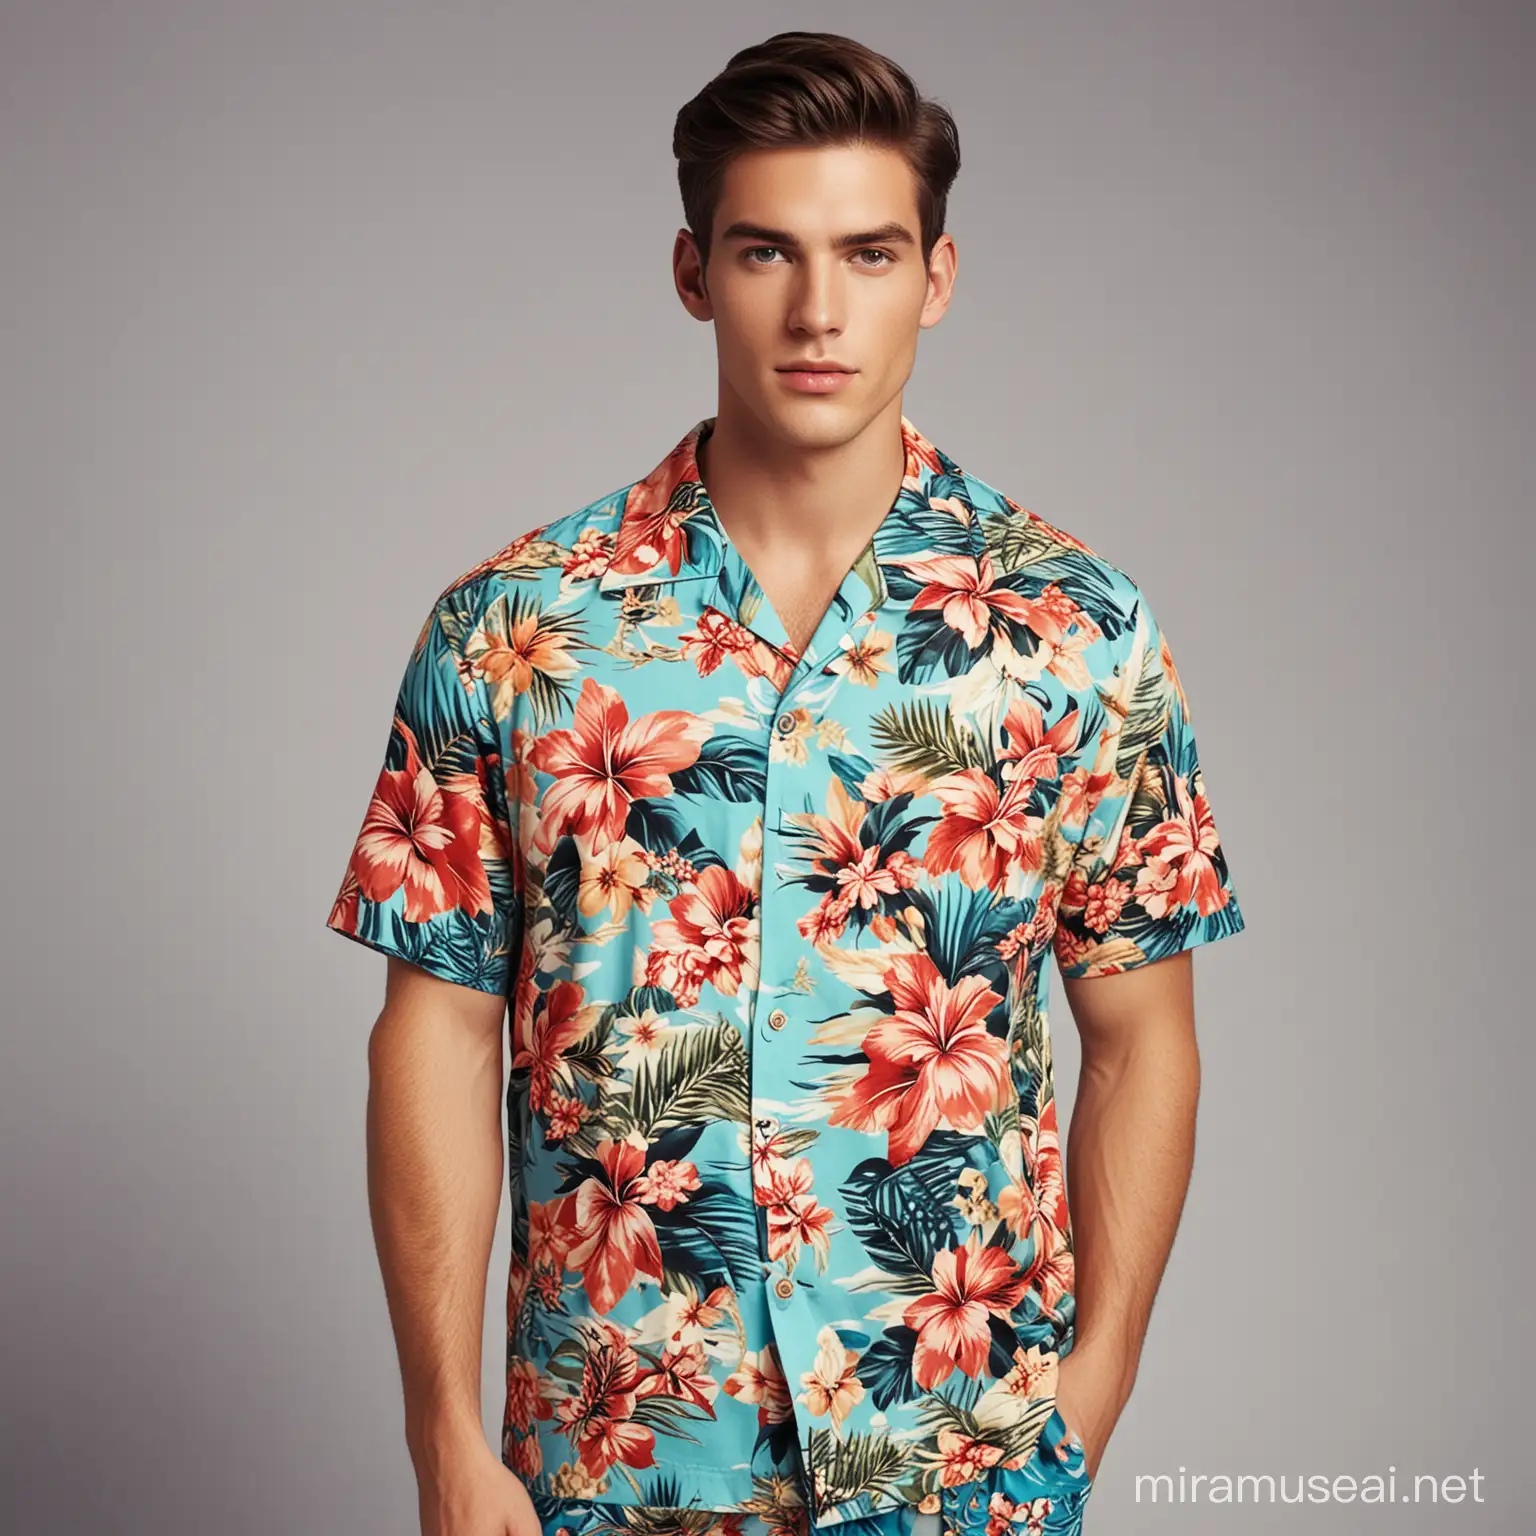 create me a male model wearing a Hawaiian shirt,